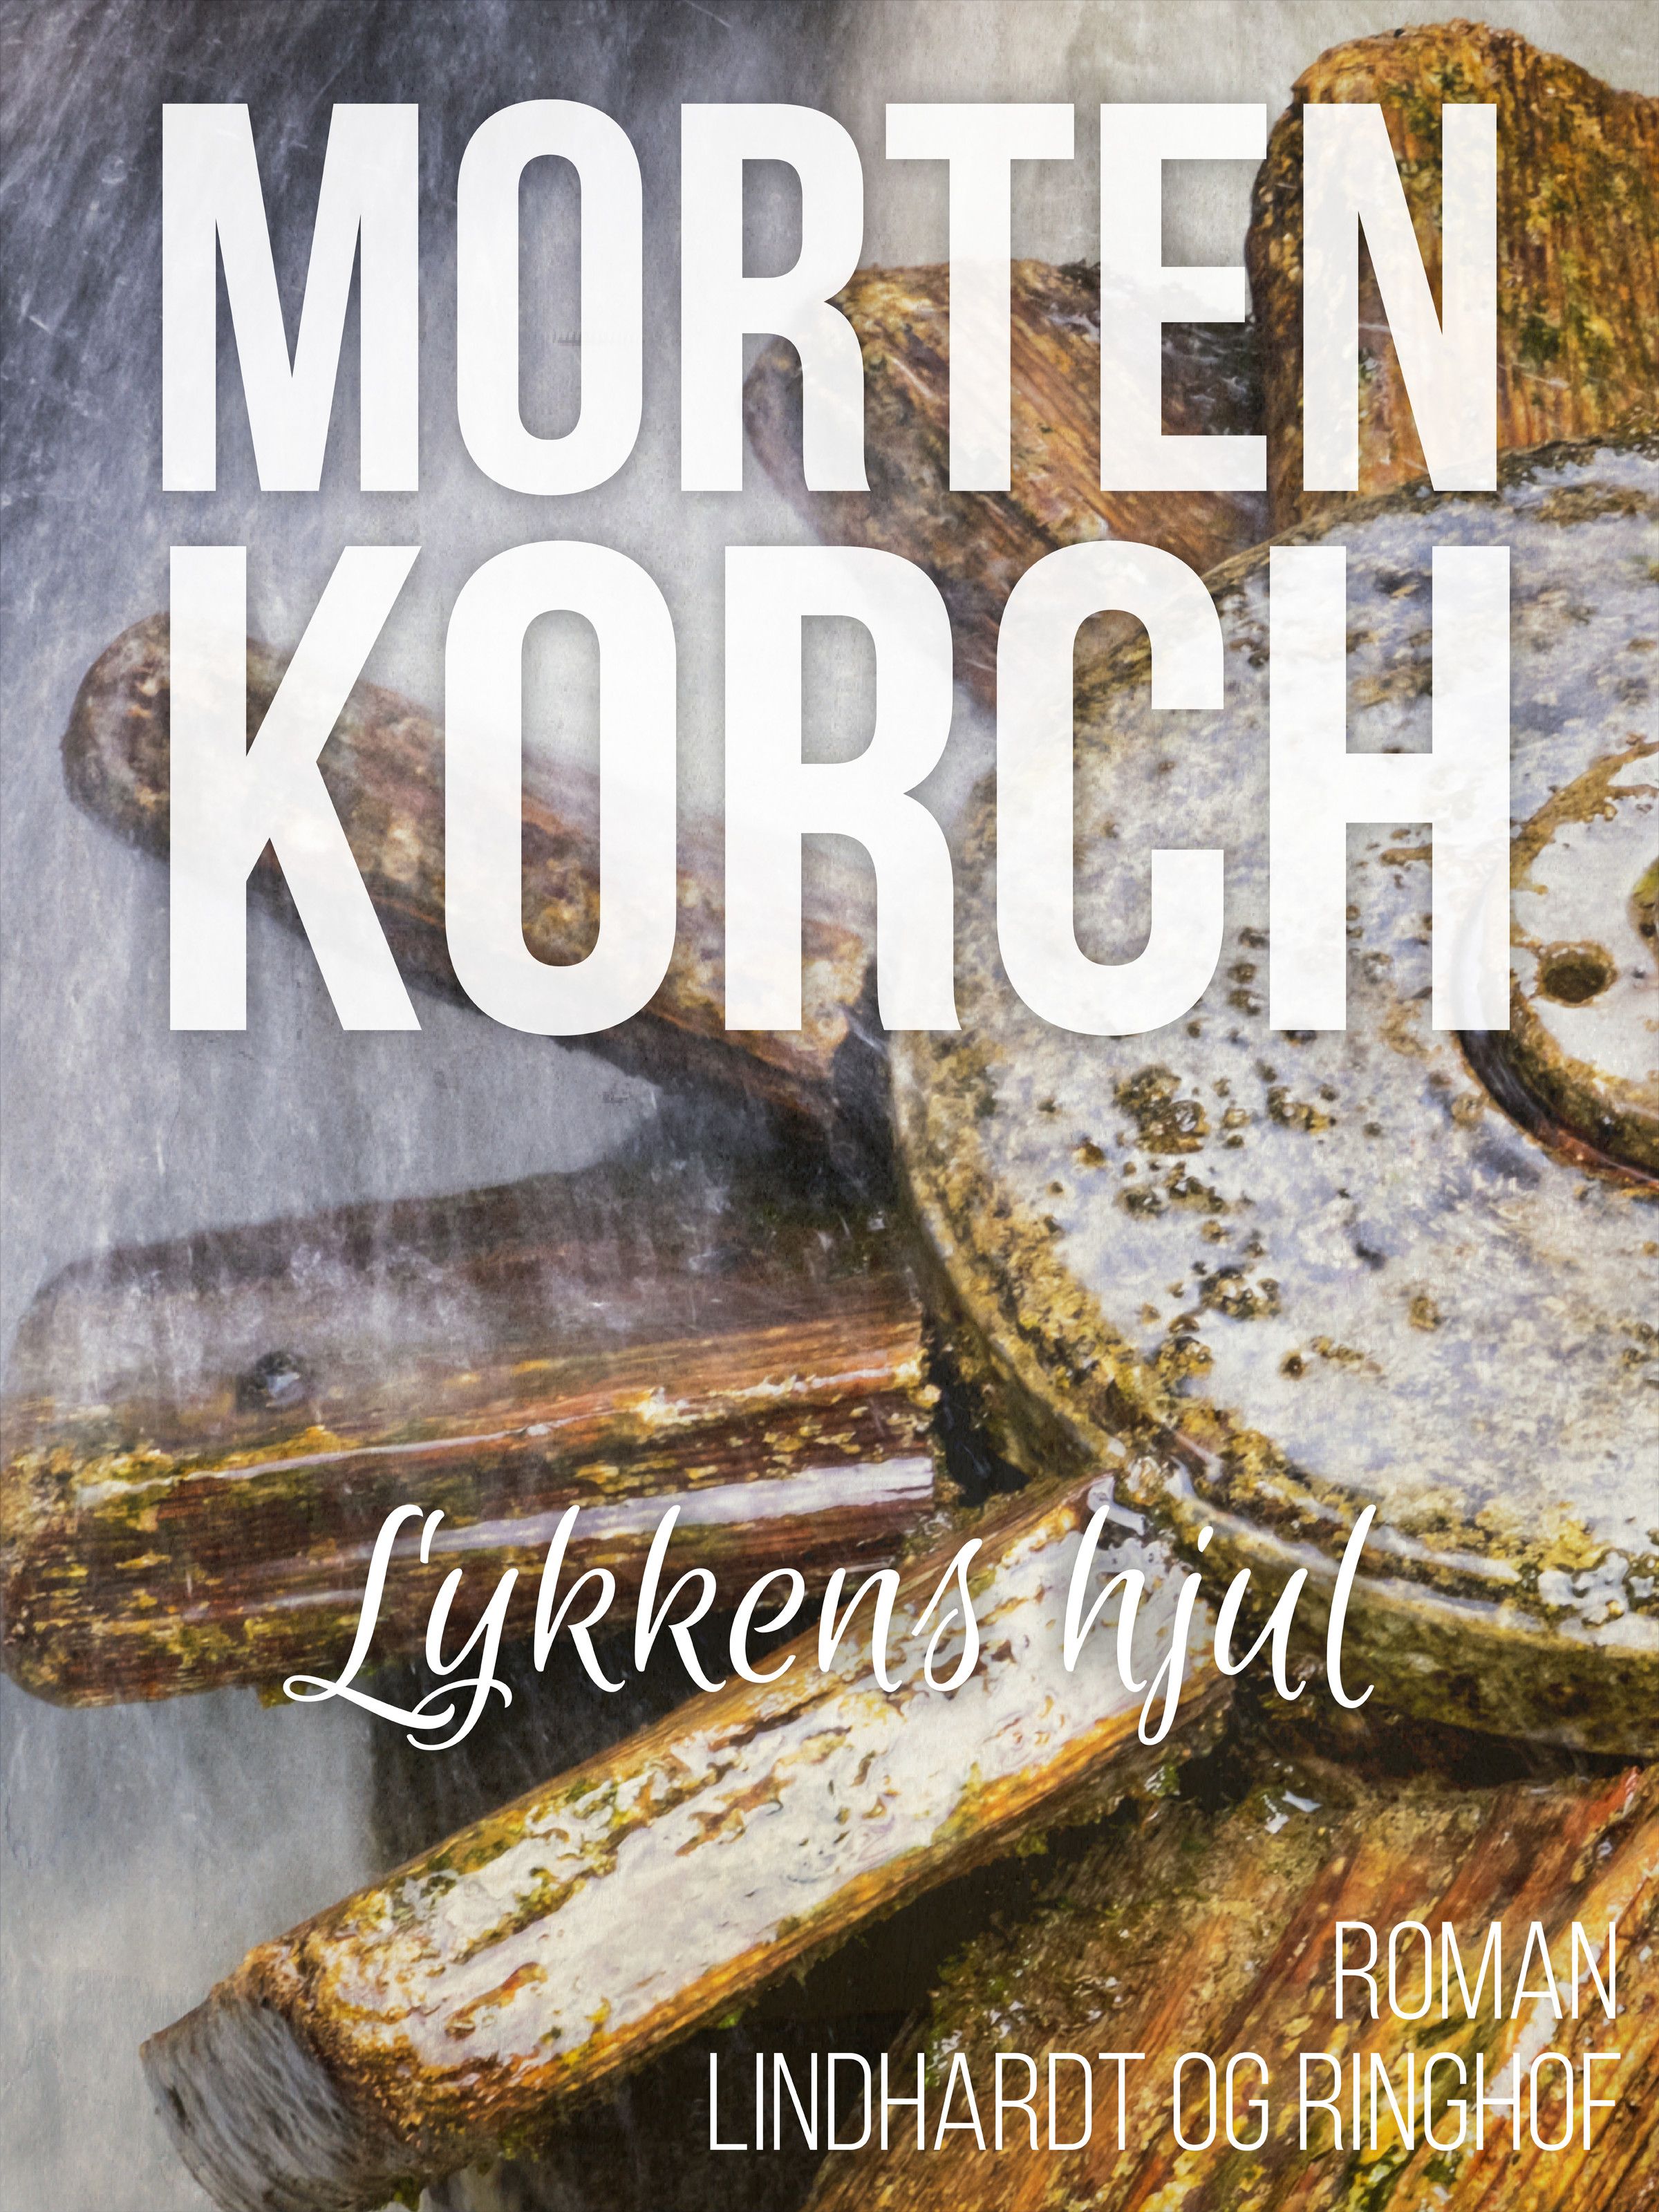 Lykkens hjul, audiobook by Morten Korch